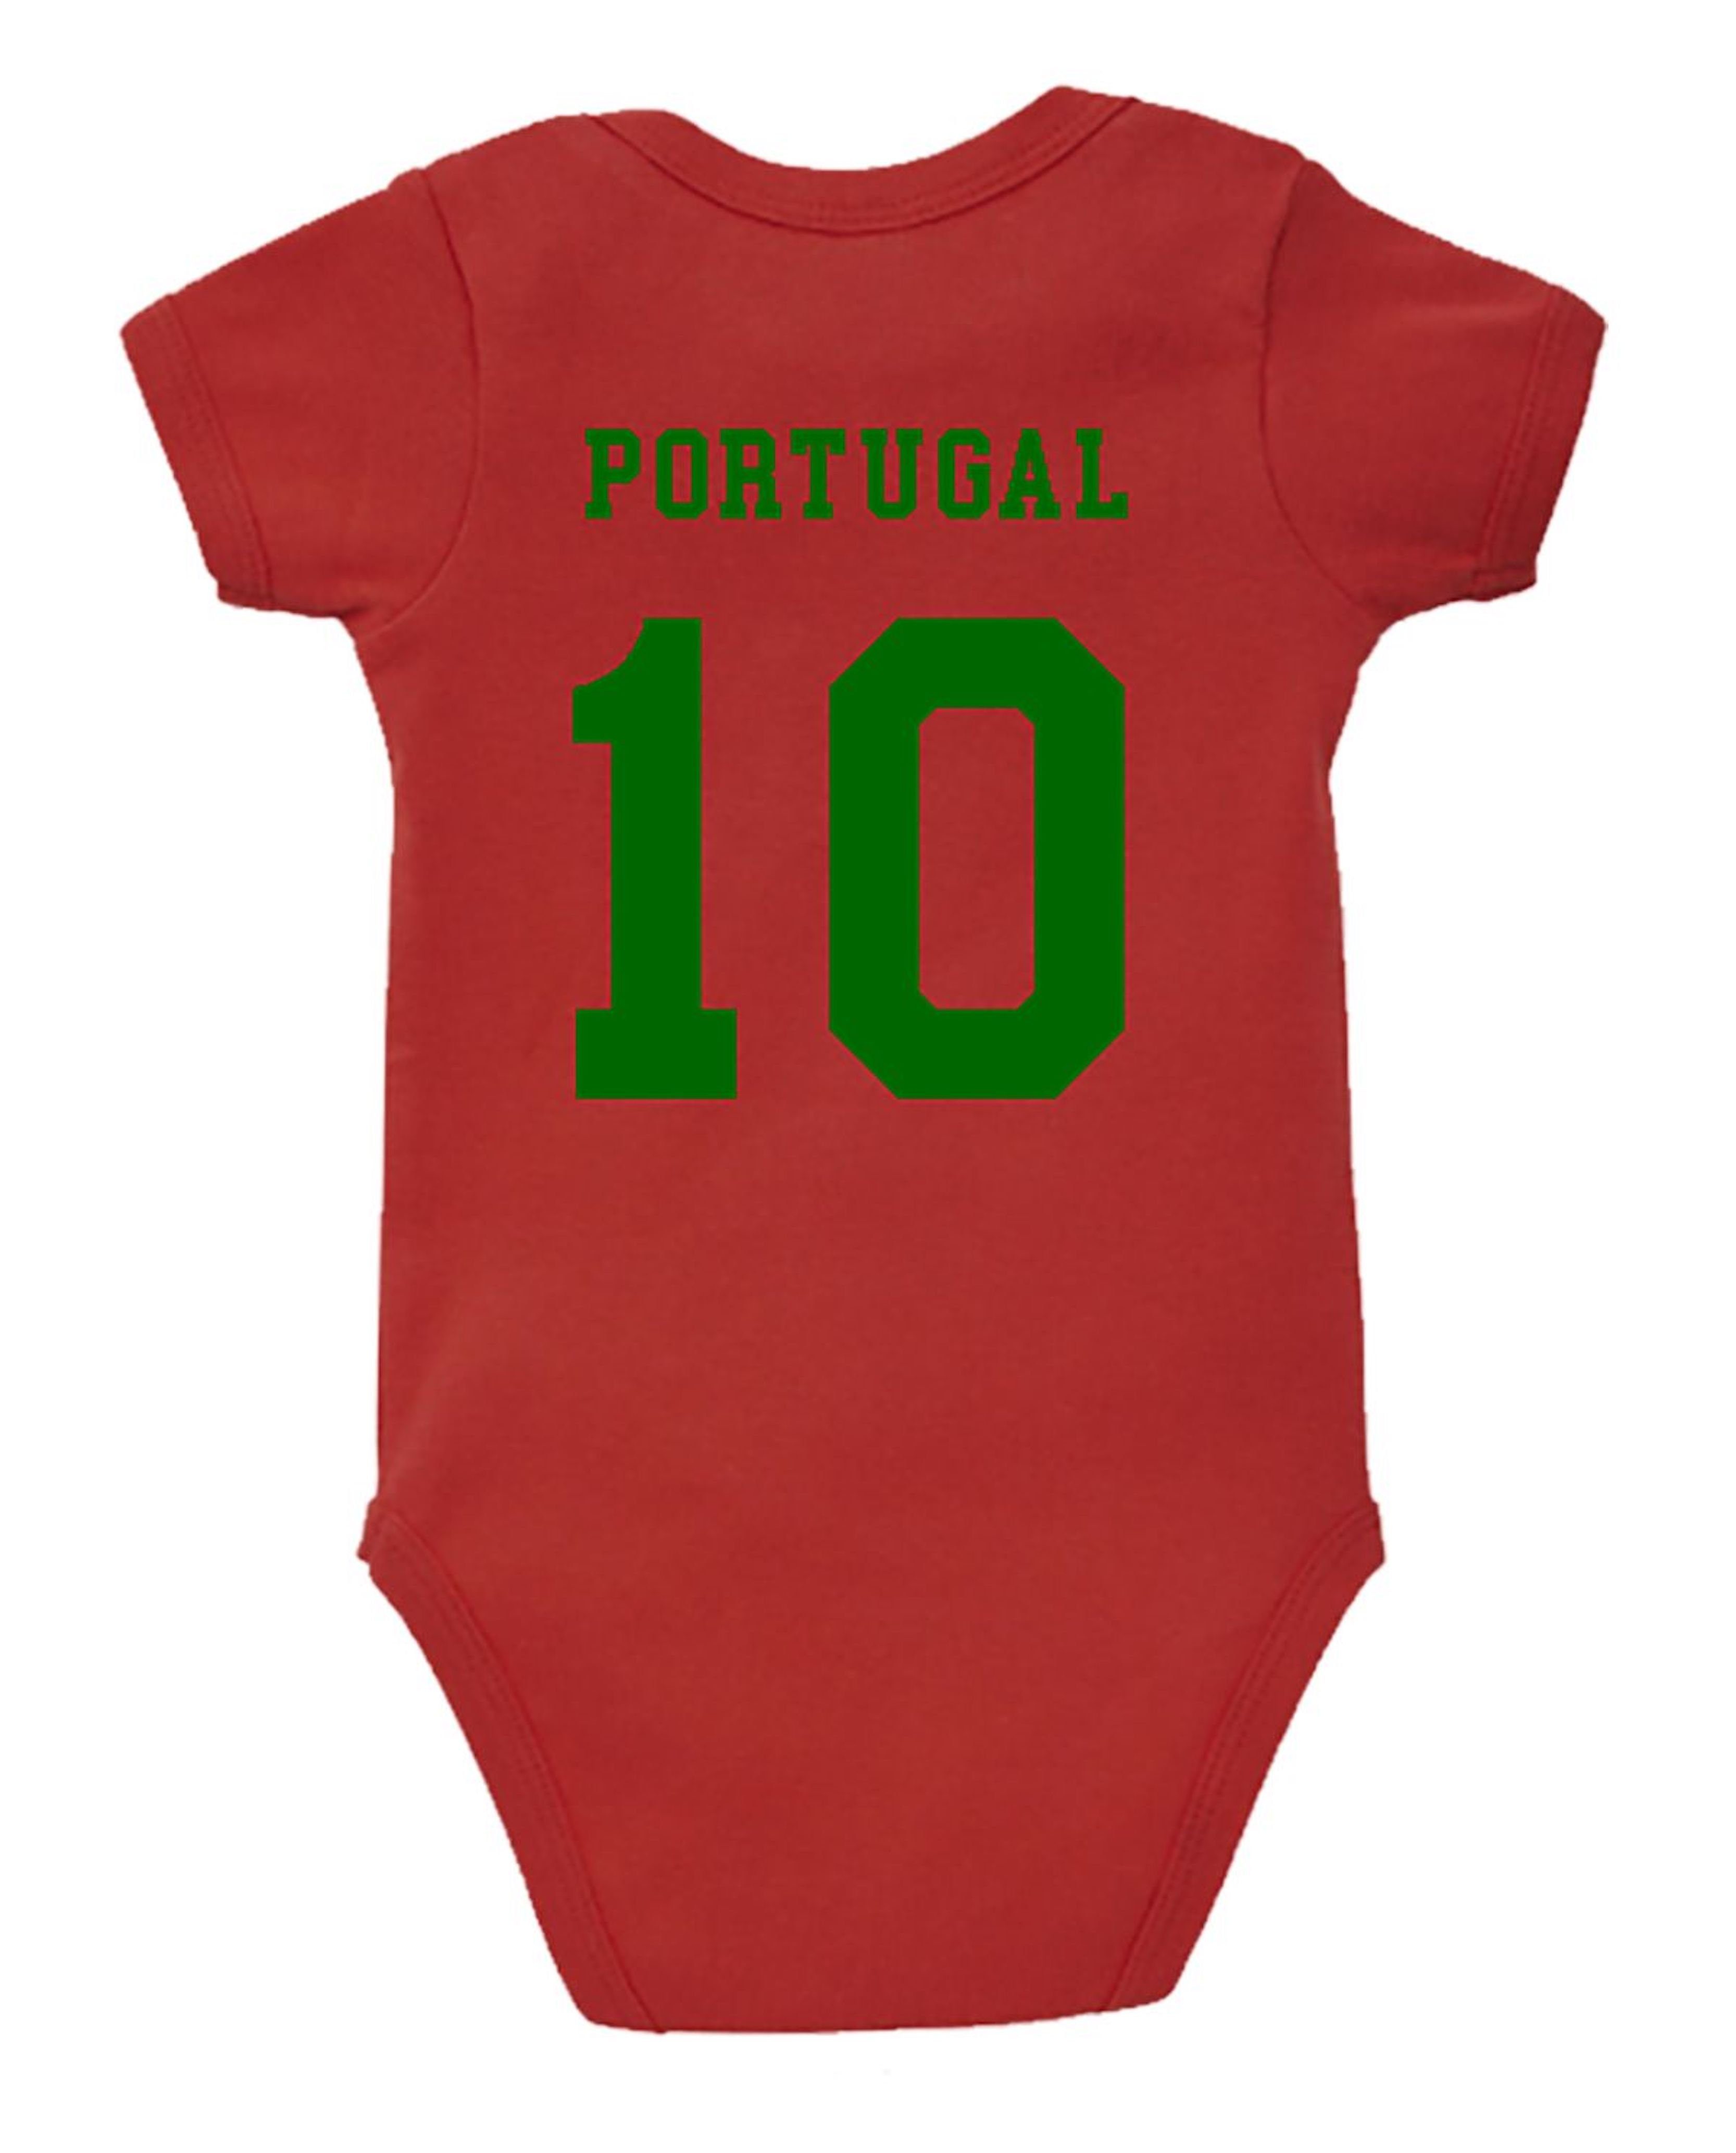 Youth Designz Kurzarmbody Baby mit Kinder trendigem Portugal Motiv Body Strampler